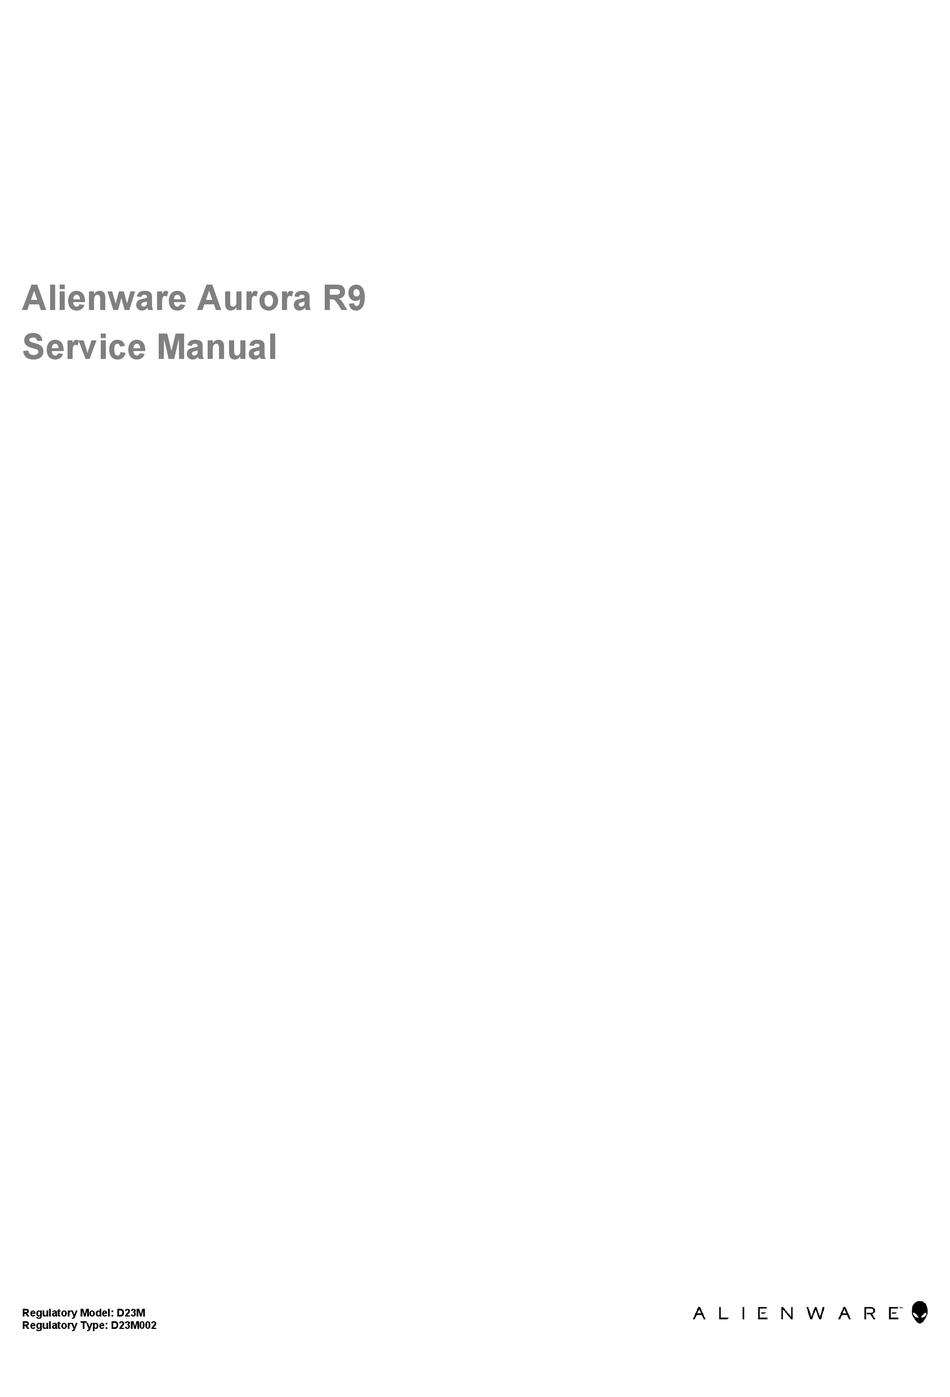 ALIENWARE AURORA R9 SERVICE MANUAL Pdf Download | ManualsLib